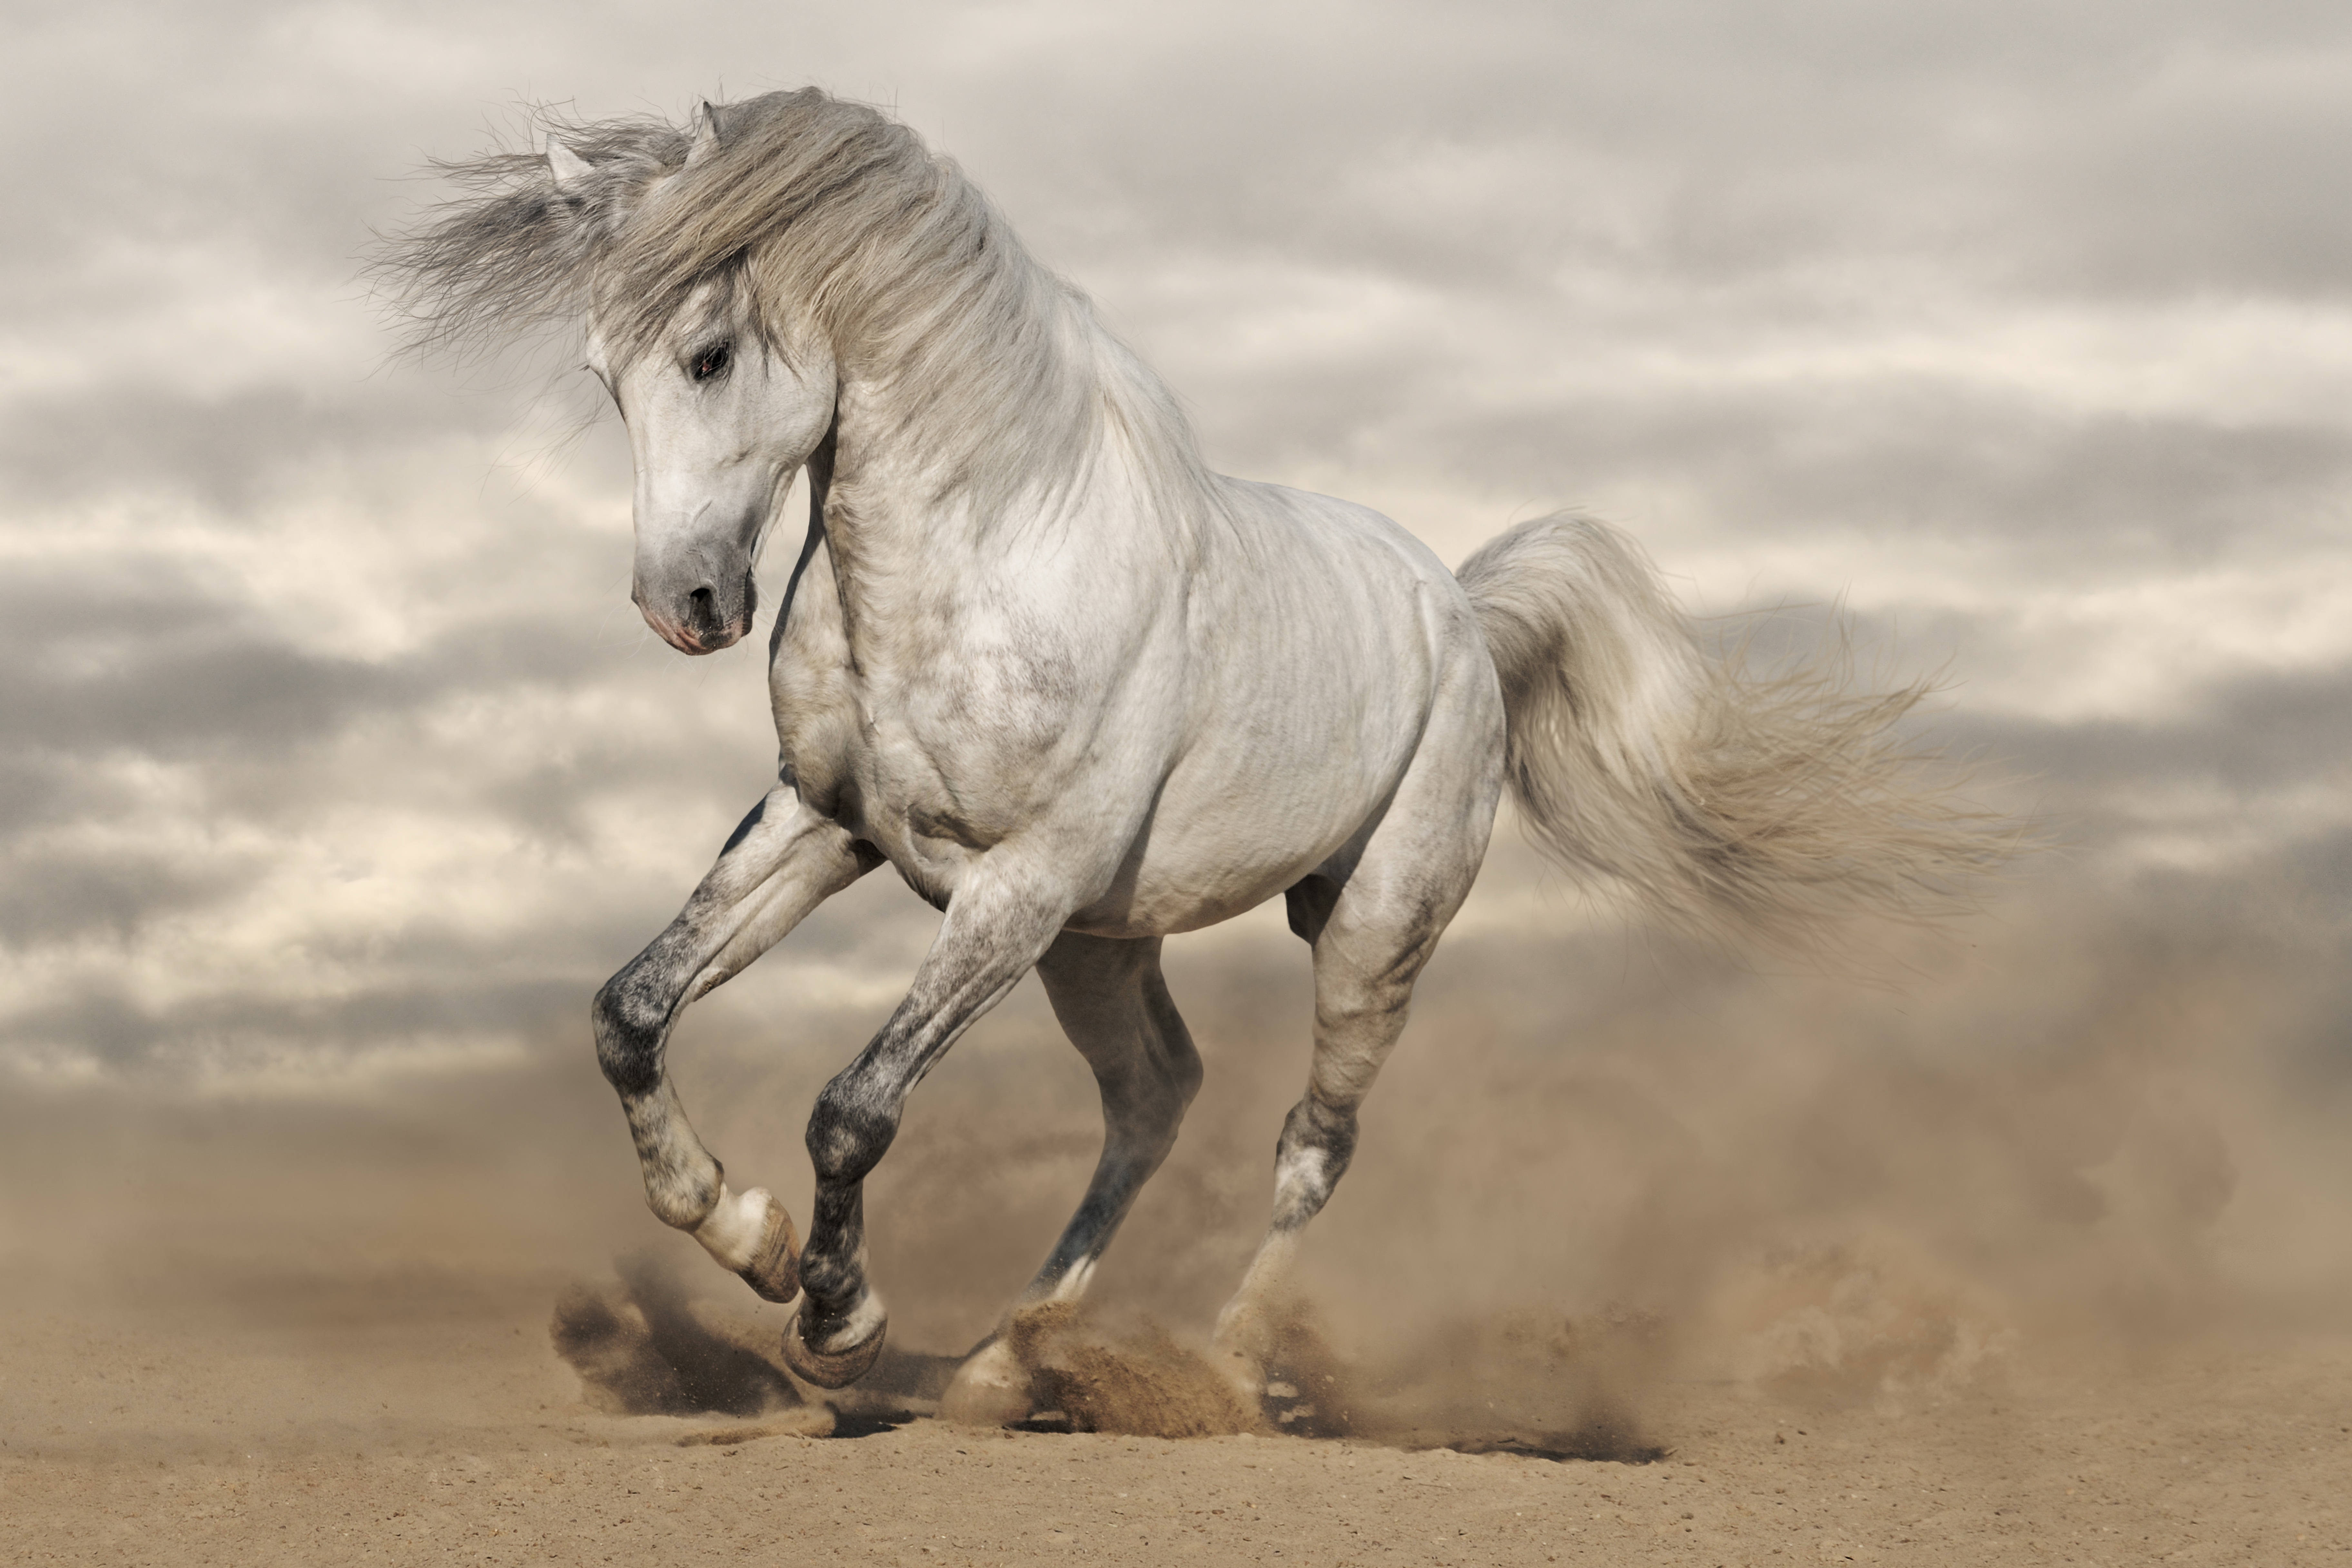 Image: Horse, white, grace, sand, dust, gallop, maneuver, clouds